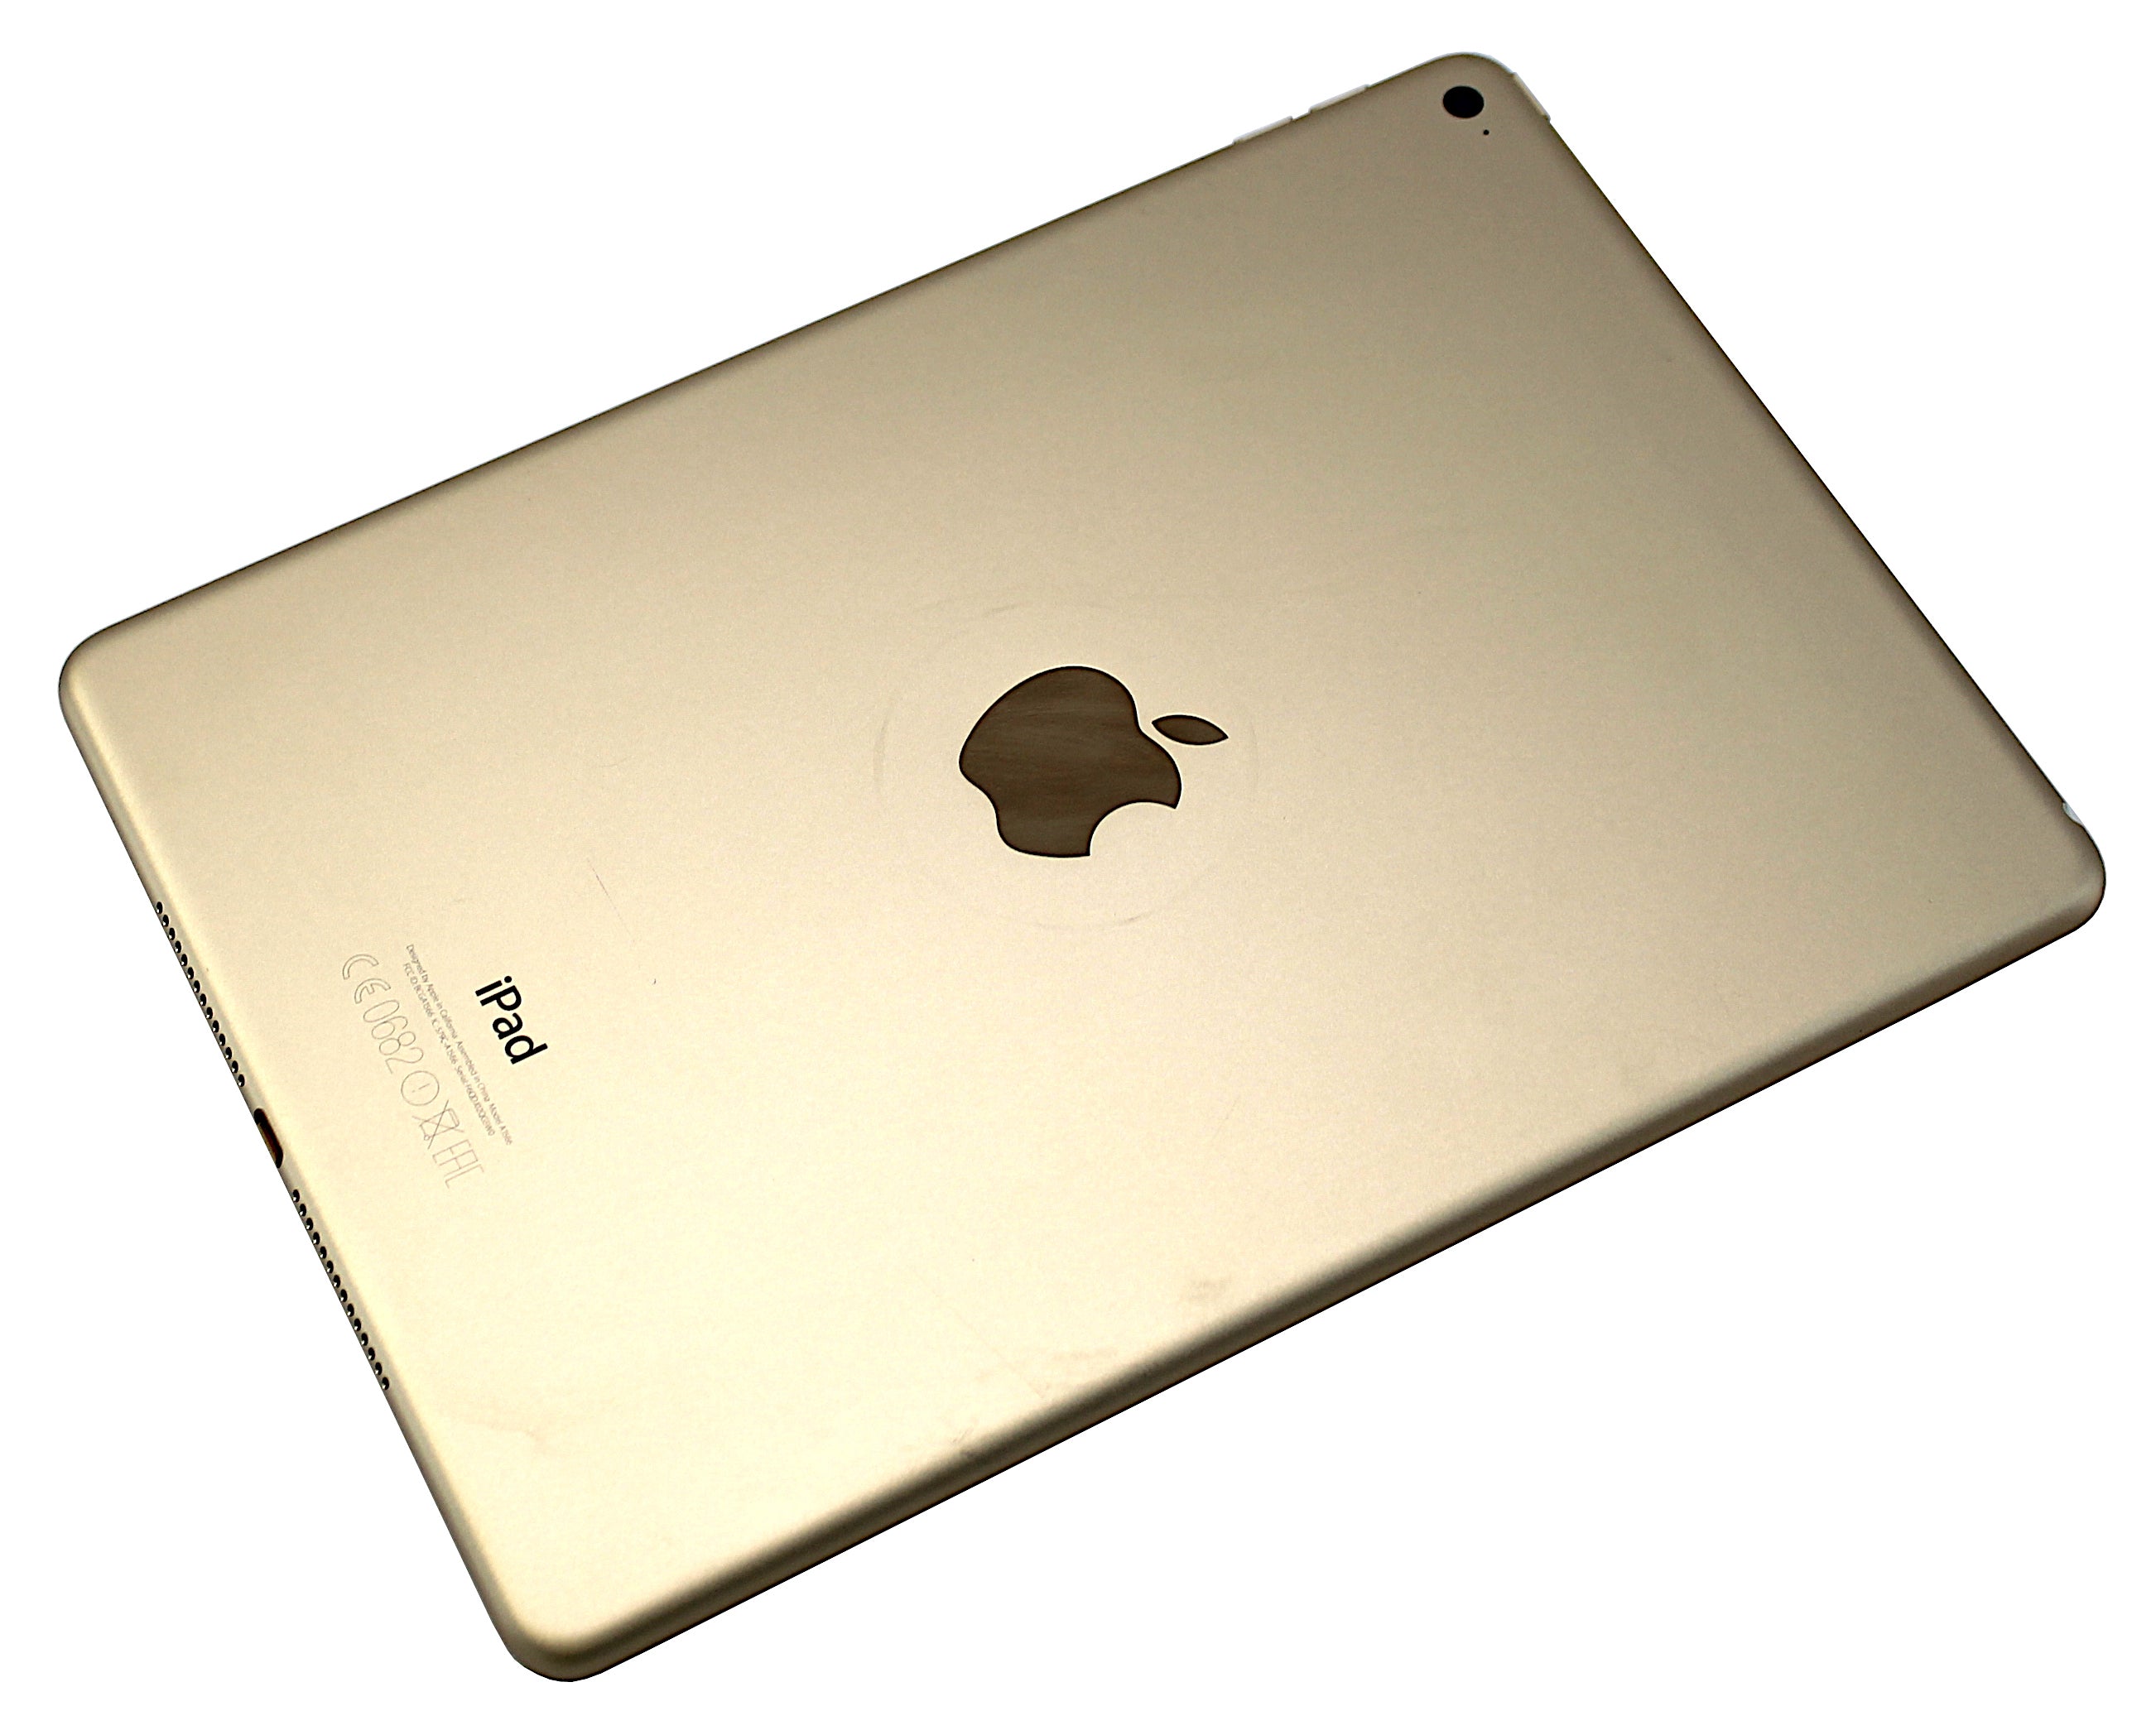 Apple iPad Air 2 Tablet, 64GB, WiFi, Gold, A1566